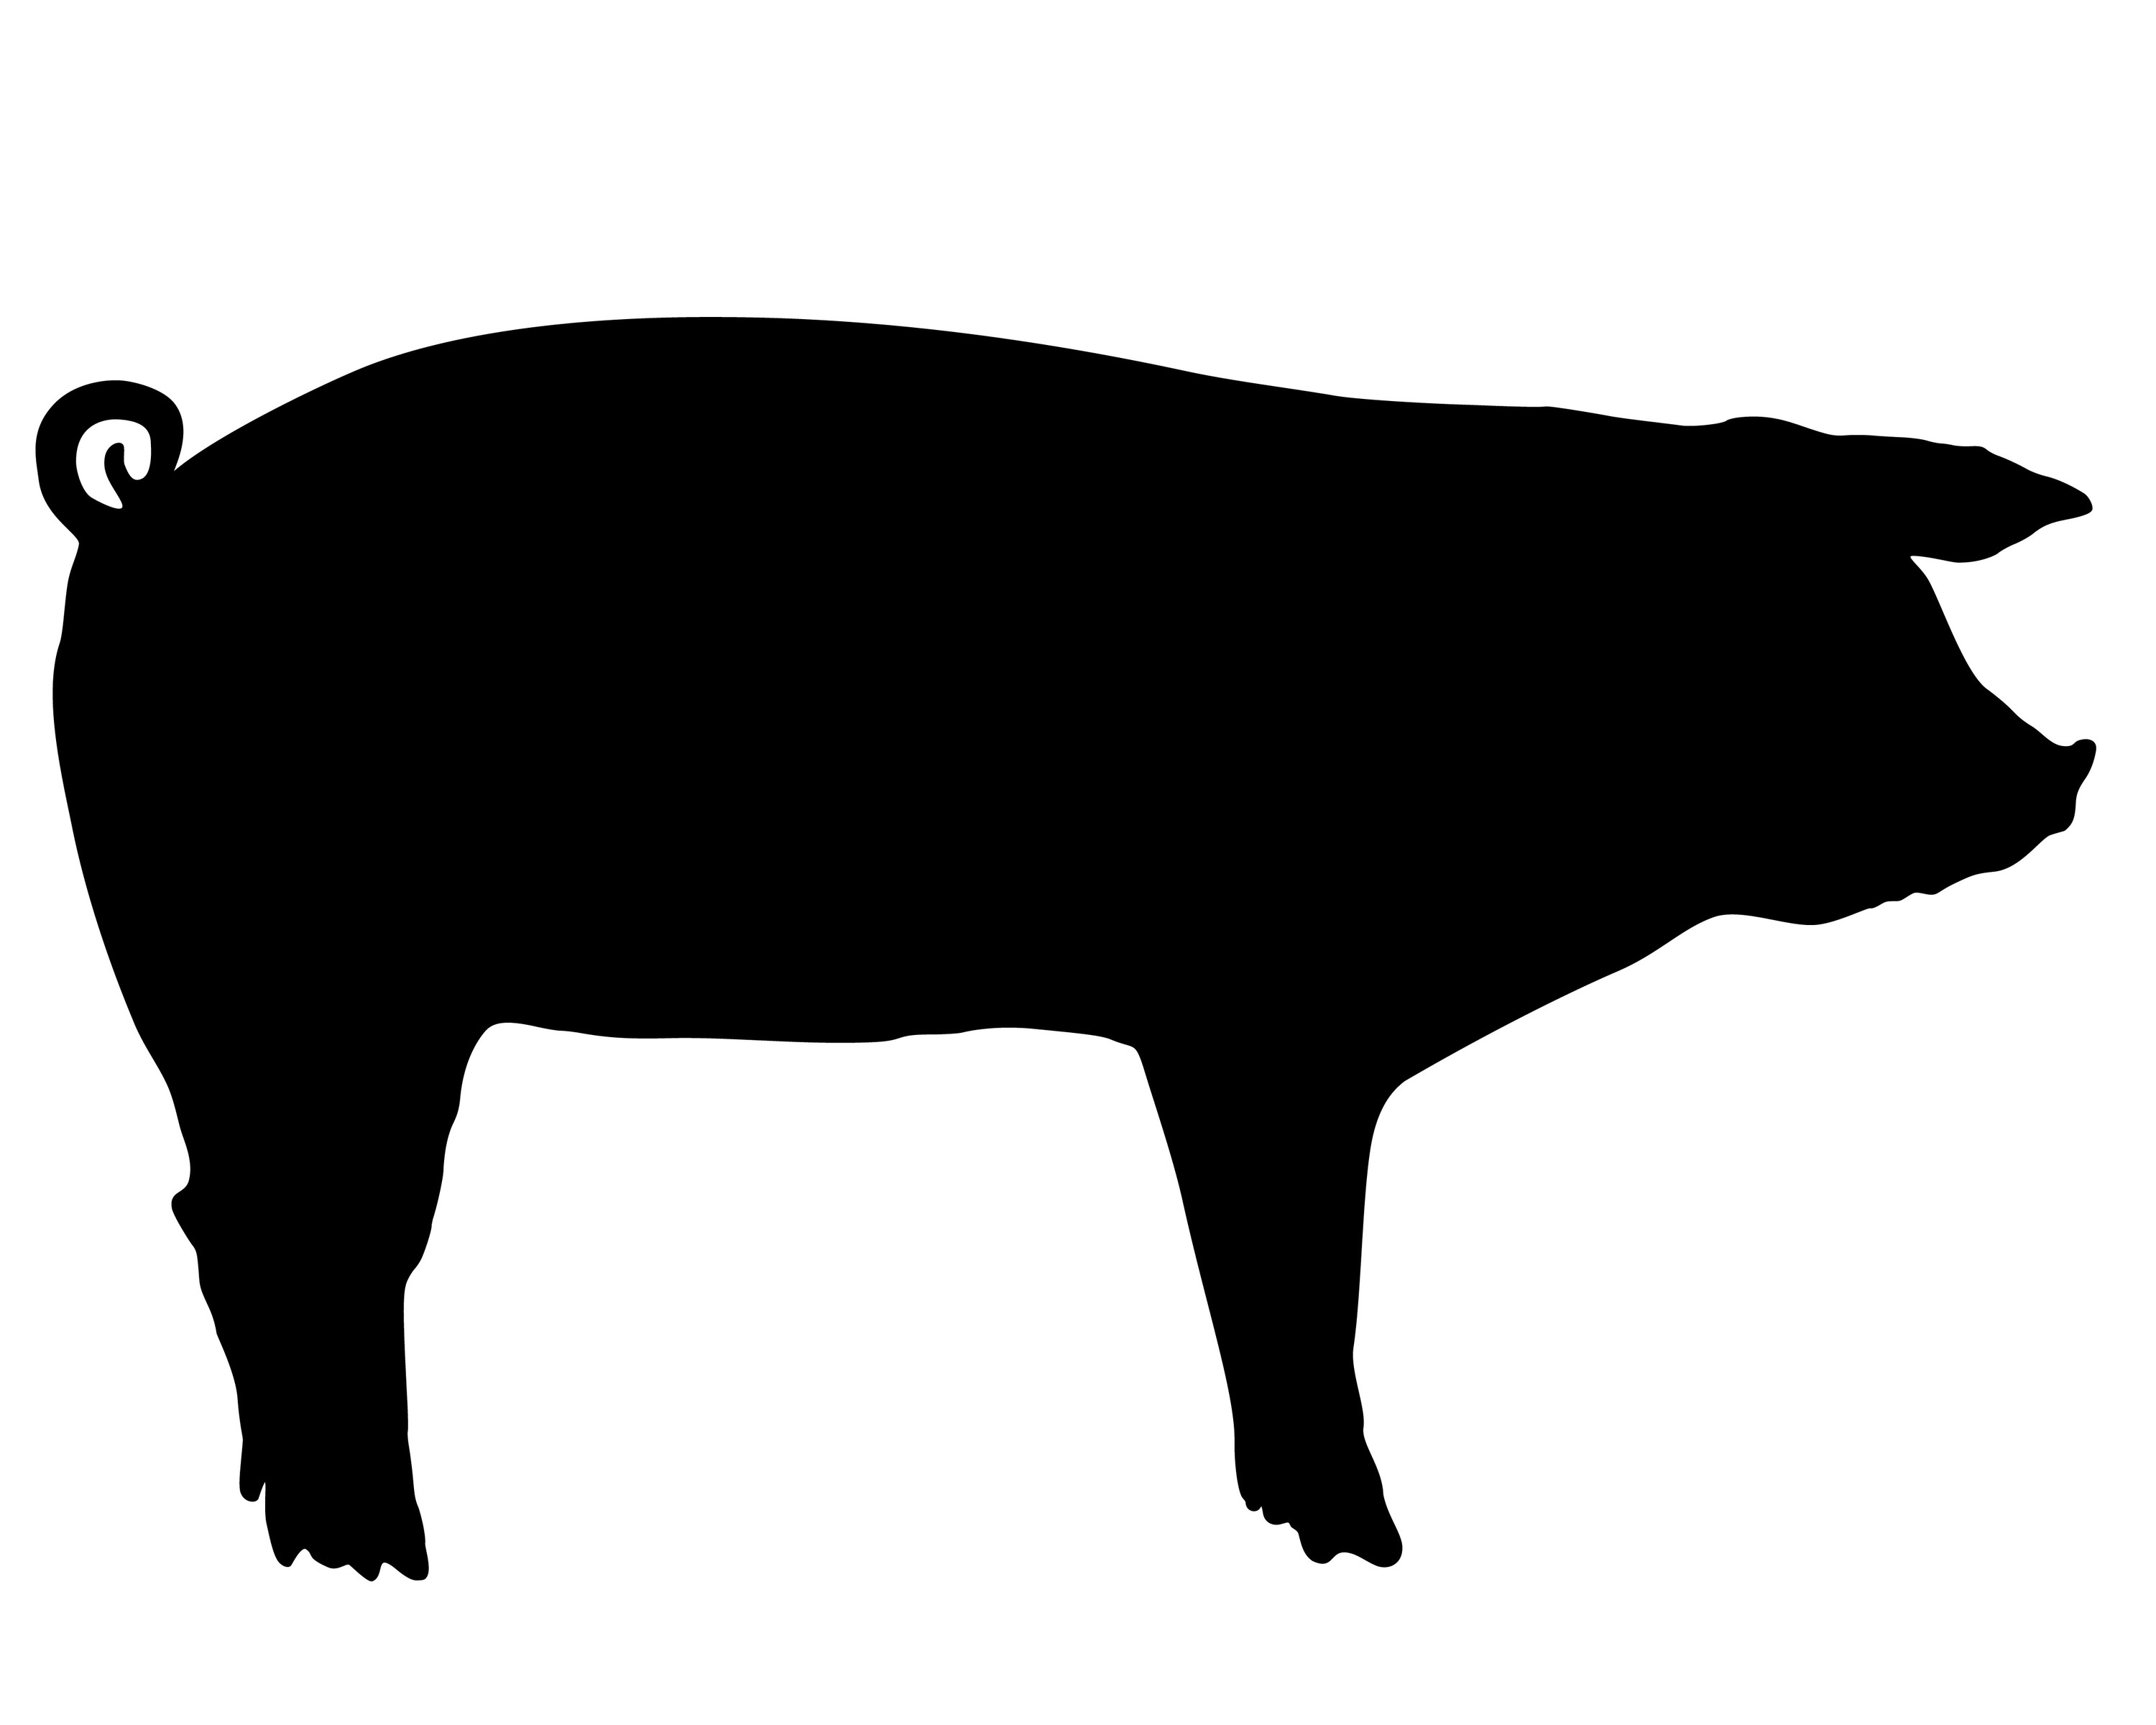 show pig silhouette clip art - Pig Silhouette Clip Art